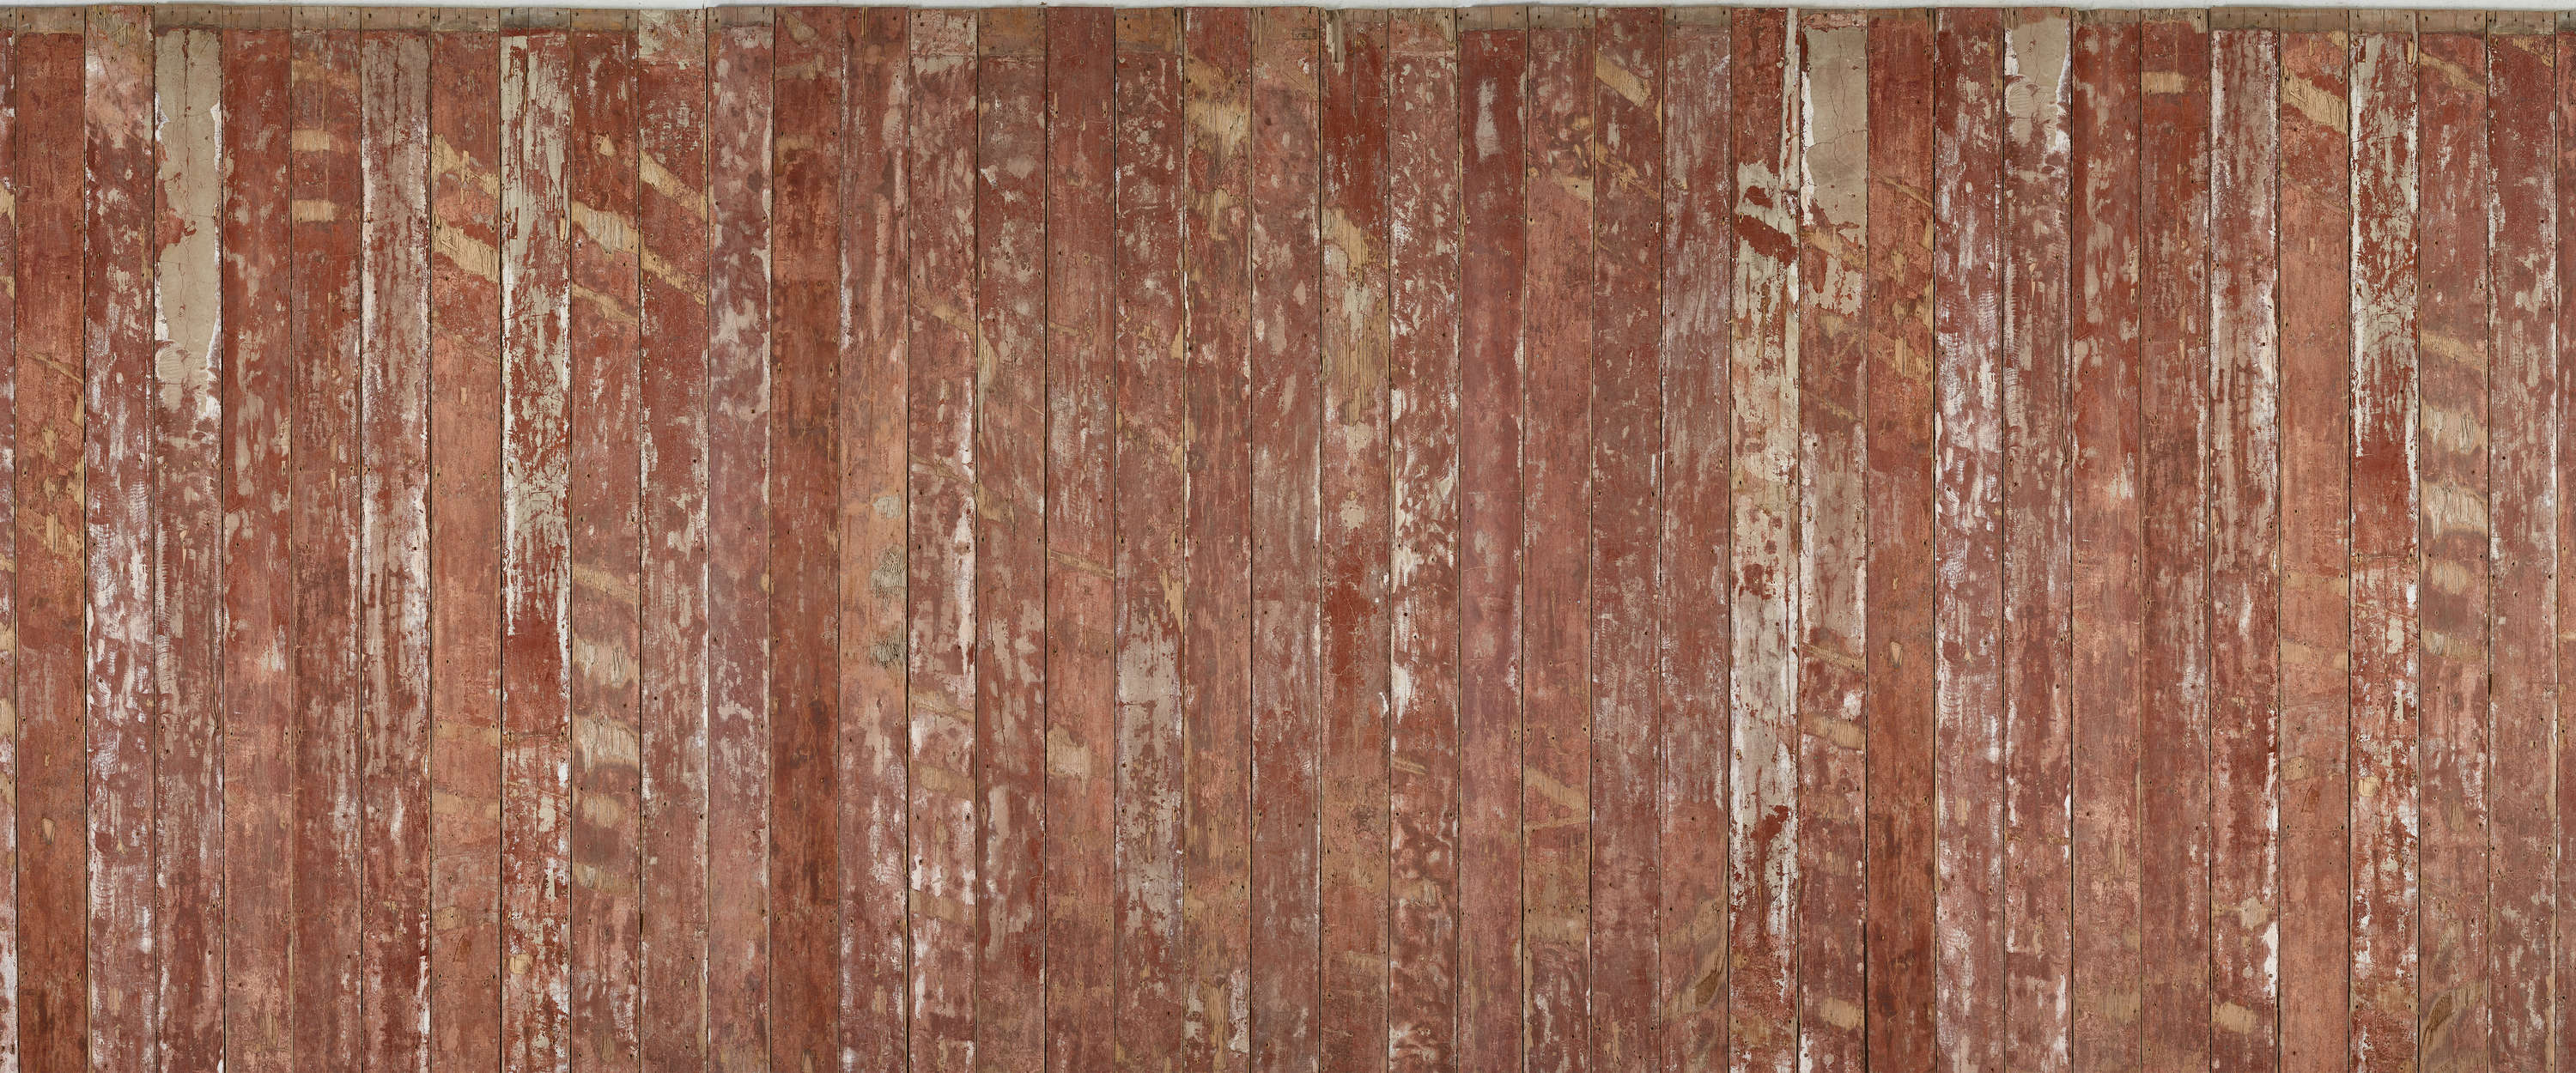             Photo wallpaper wood planks red brown wood optics in used look
        